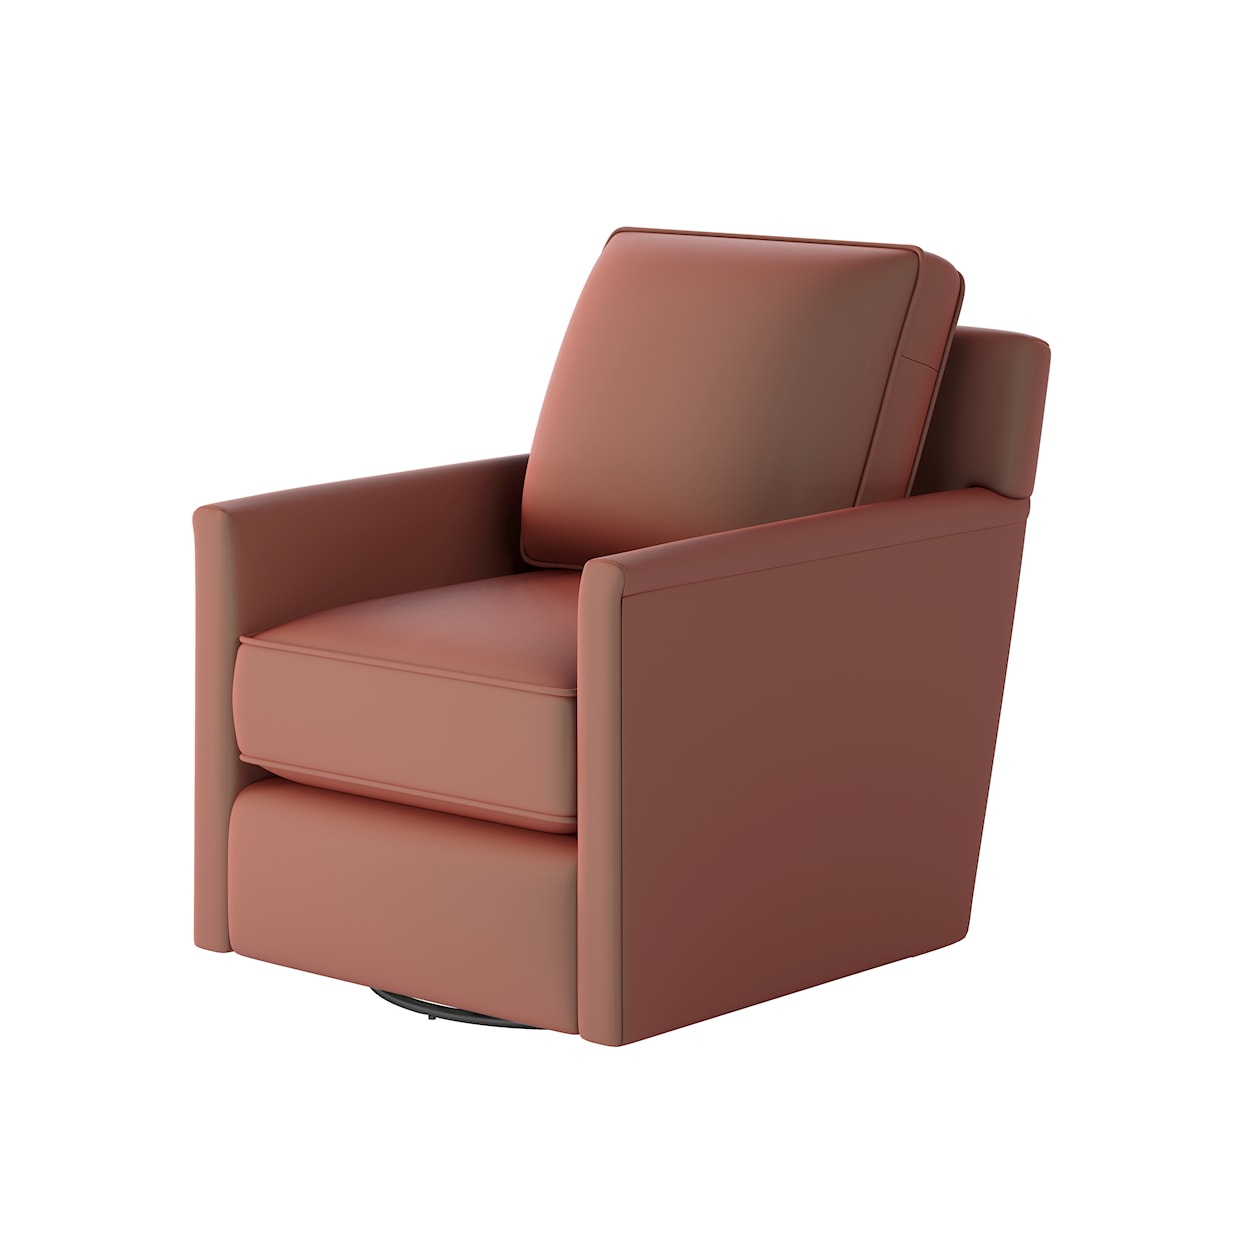 VFM Signature Grab A Seat Swivel Glider Chair